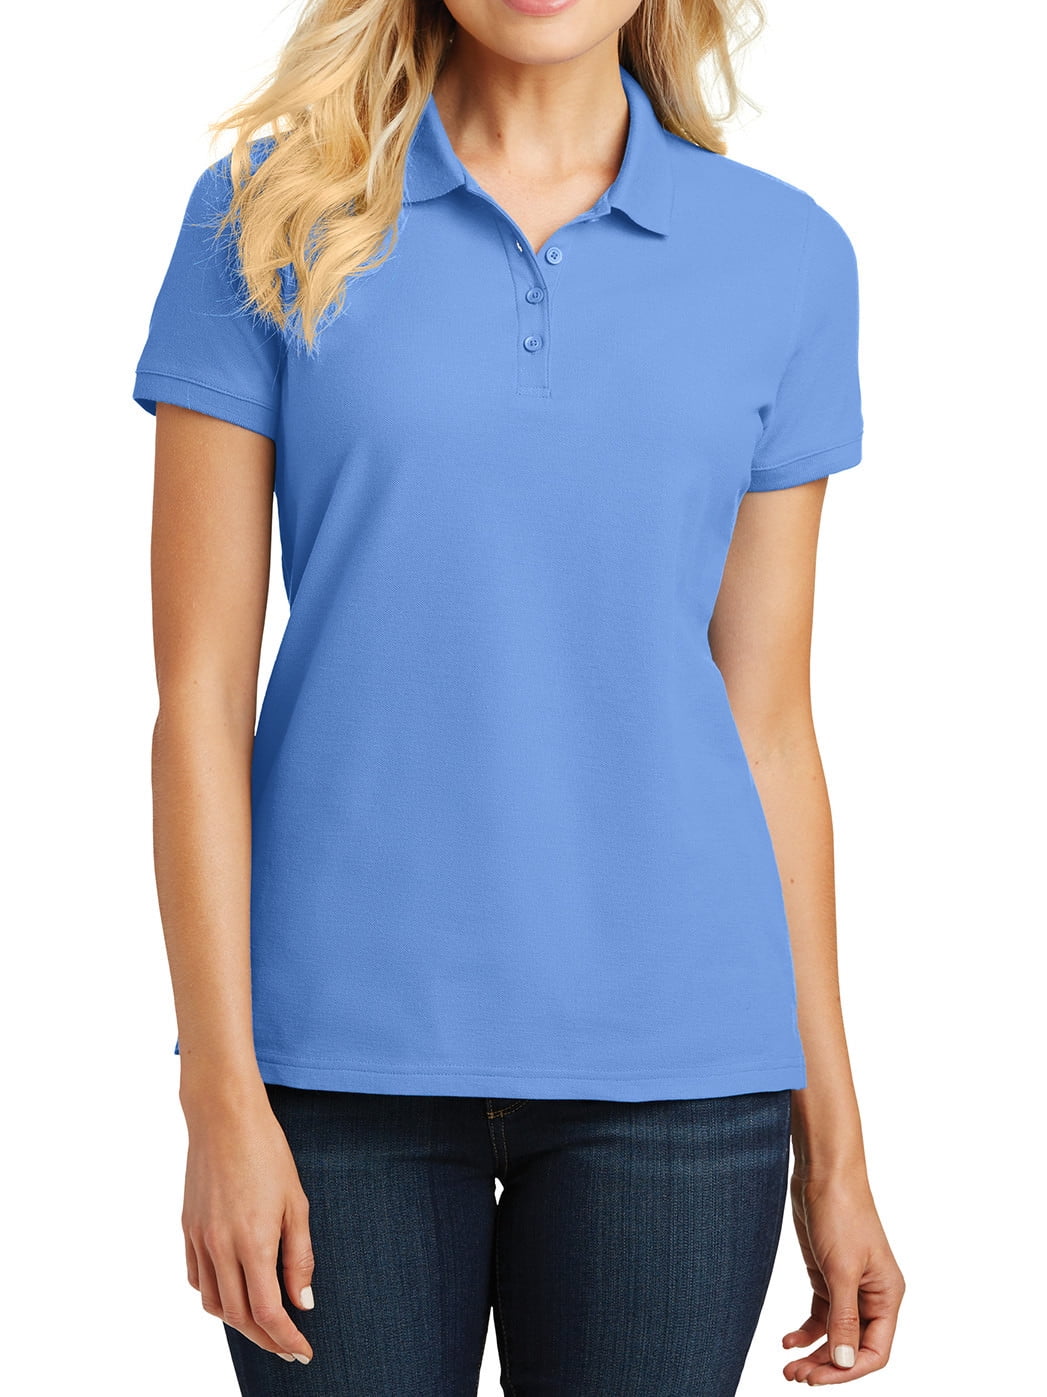 Mafoose - Mafoose Women's Core Classic Pique Polo T-Shirt Carolina Blue ...